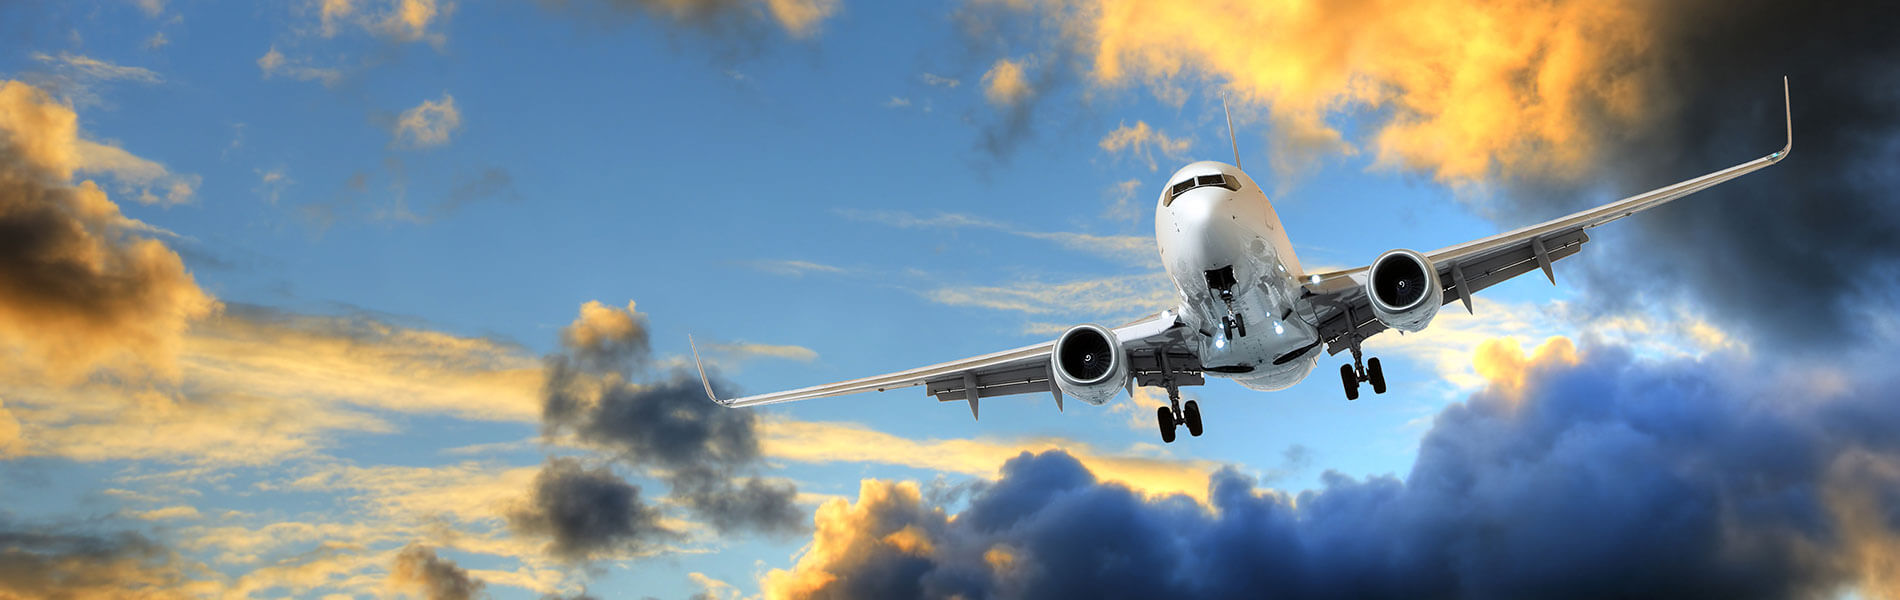 Flight Data Analytics for Safety & Risk Management